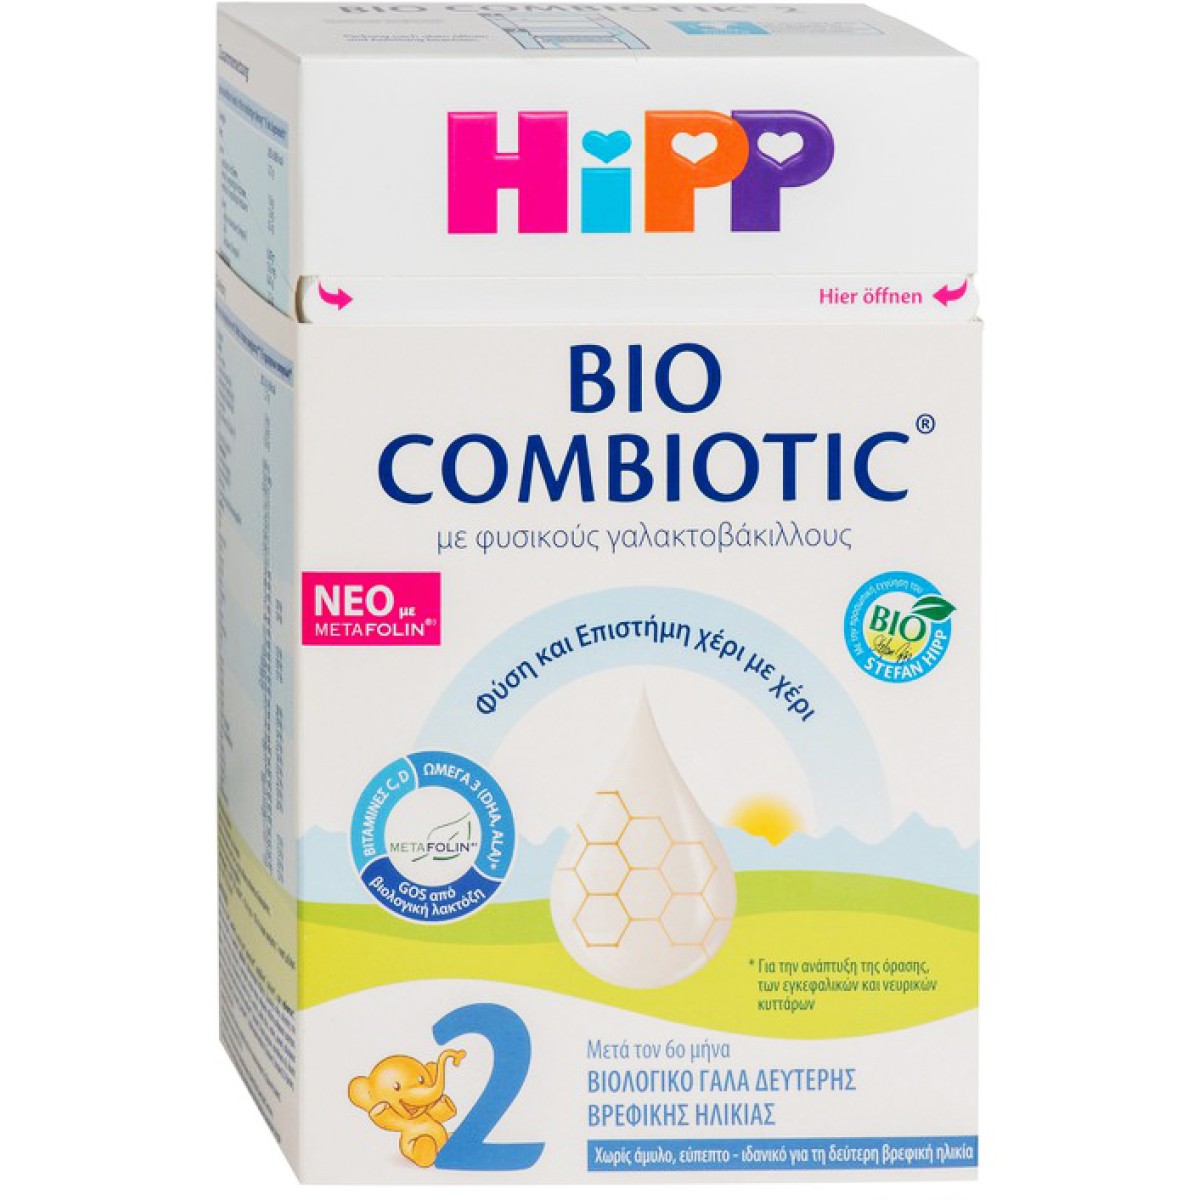 HiPP 2 | Bio Combiotic | Βιολογικό γάλα Δεύτερης Βρεφικής Ηλικίας από 6 Μηνών με Metafolin | 600g